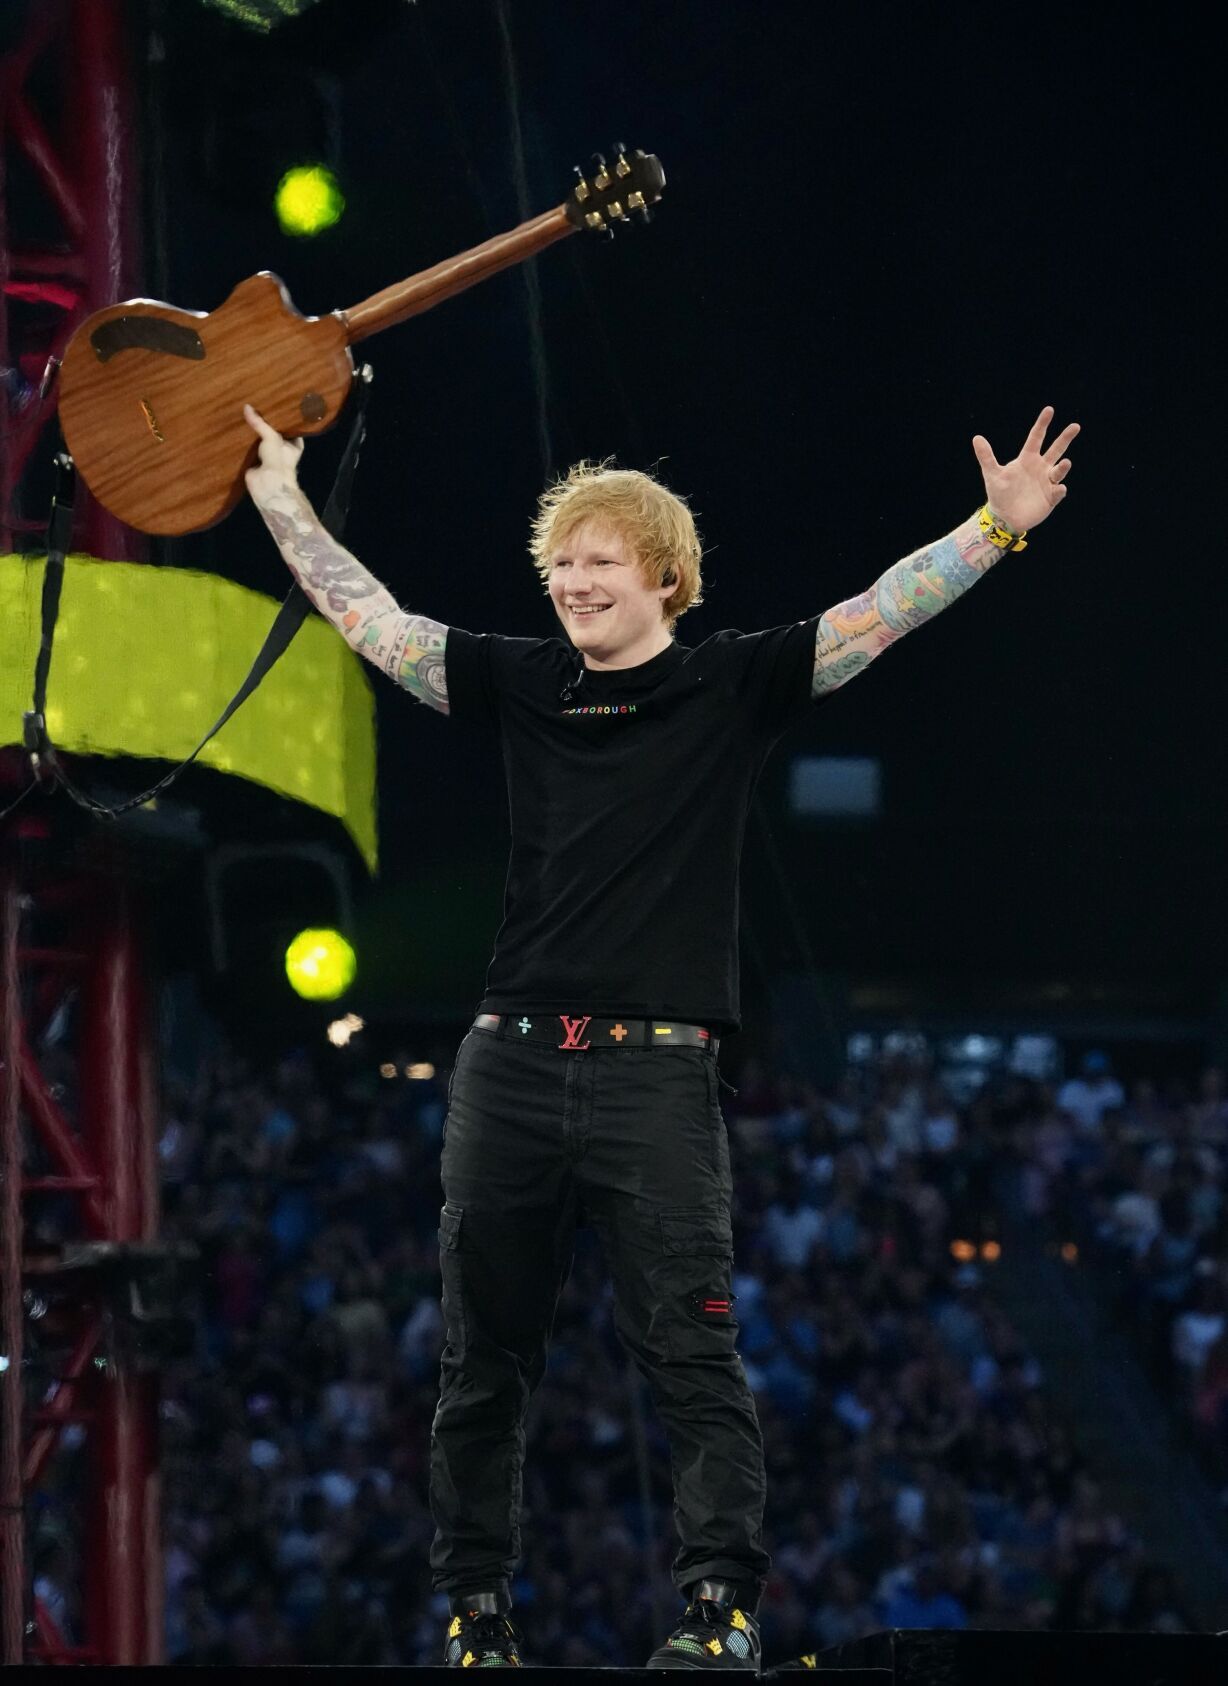 Concert Review: Mathematics Tour brings Ed Sheeran back to his